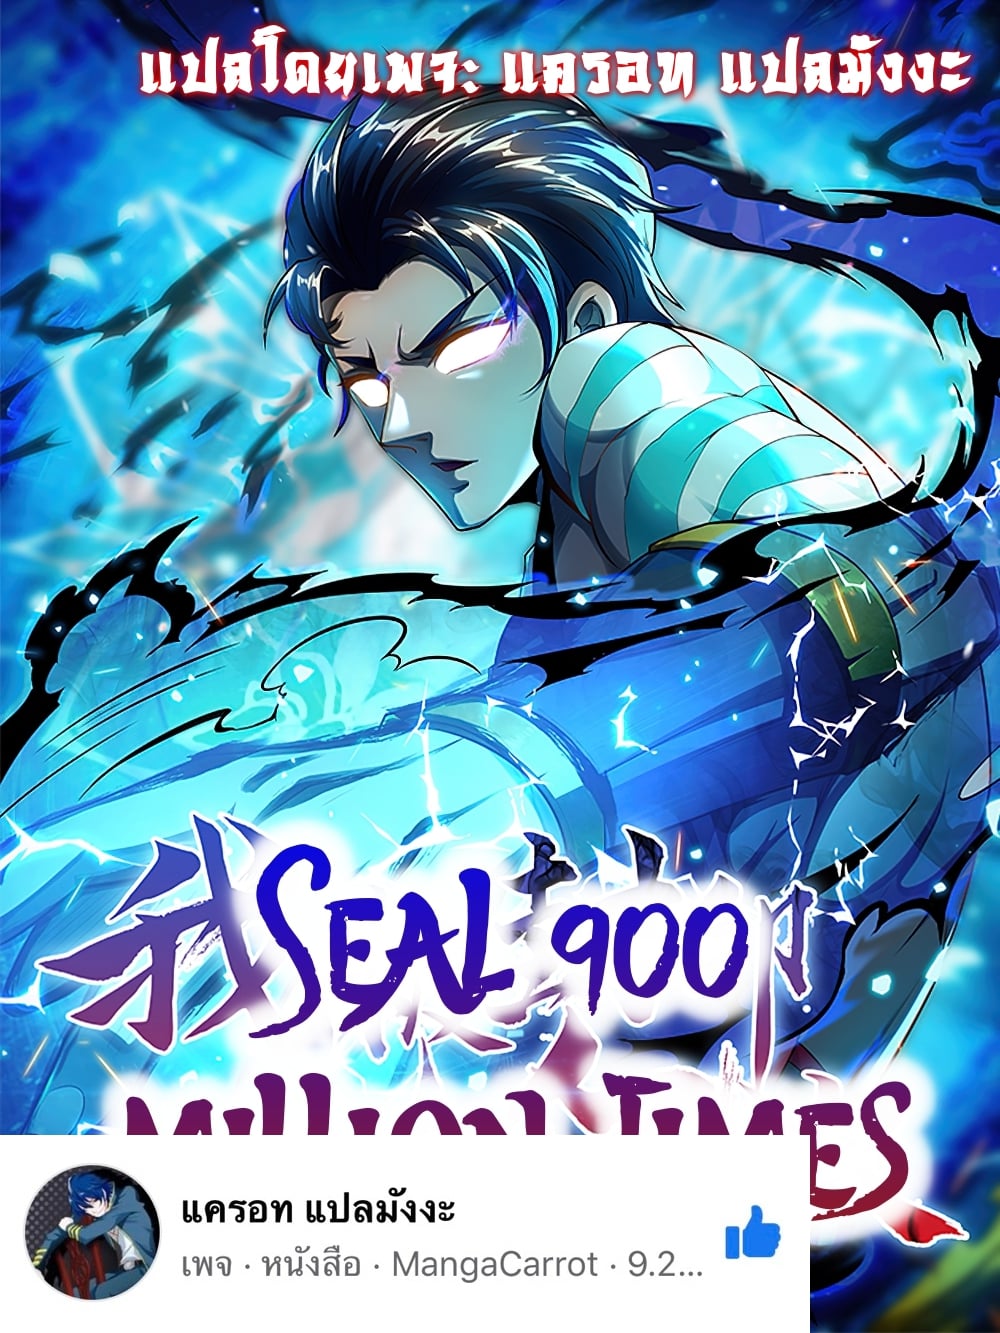 I was sealed 900 million times 19 (1)